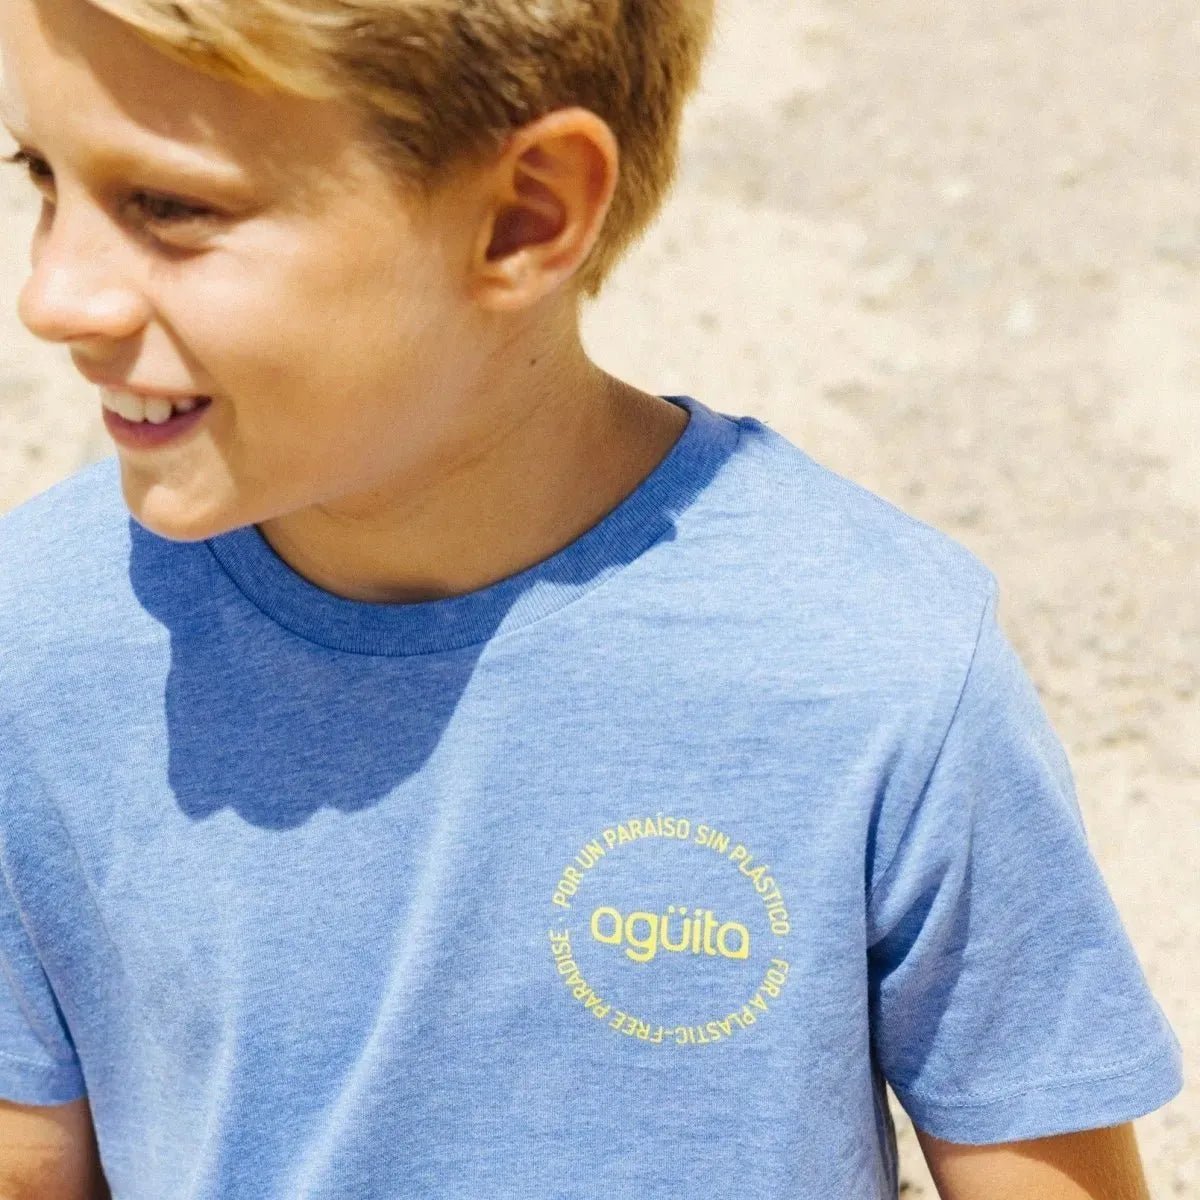 Agüita Organic Kids' Tee: Sustainable Fashion for the Young - AGÜITA